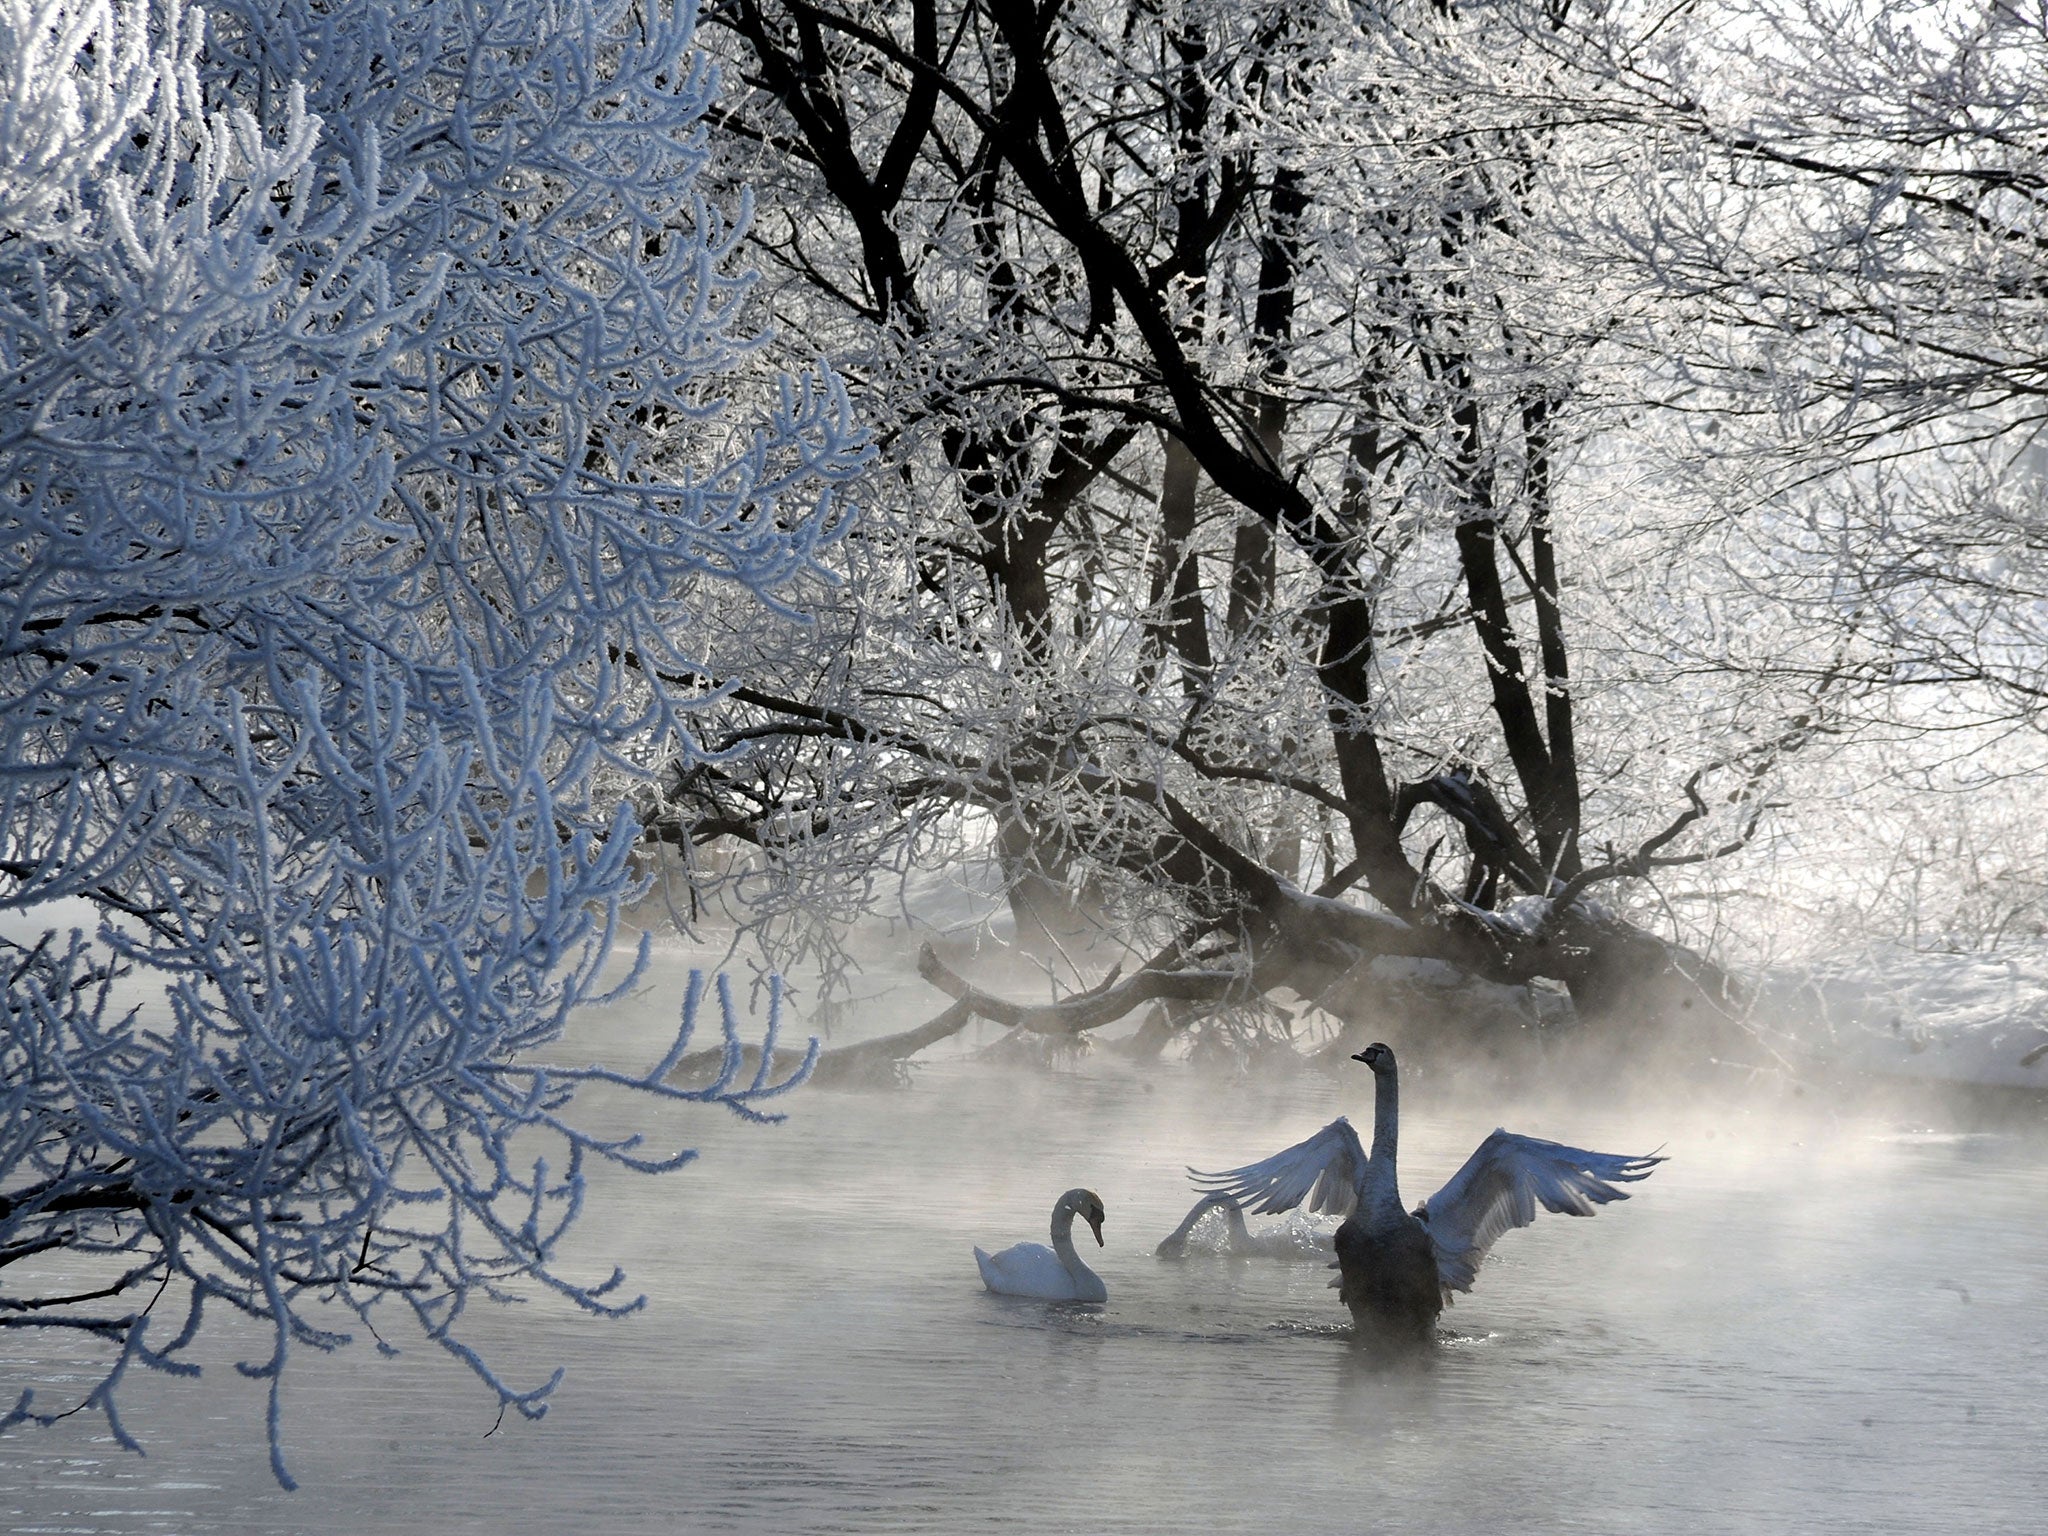 Swans swim in a lake